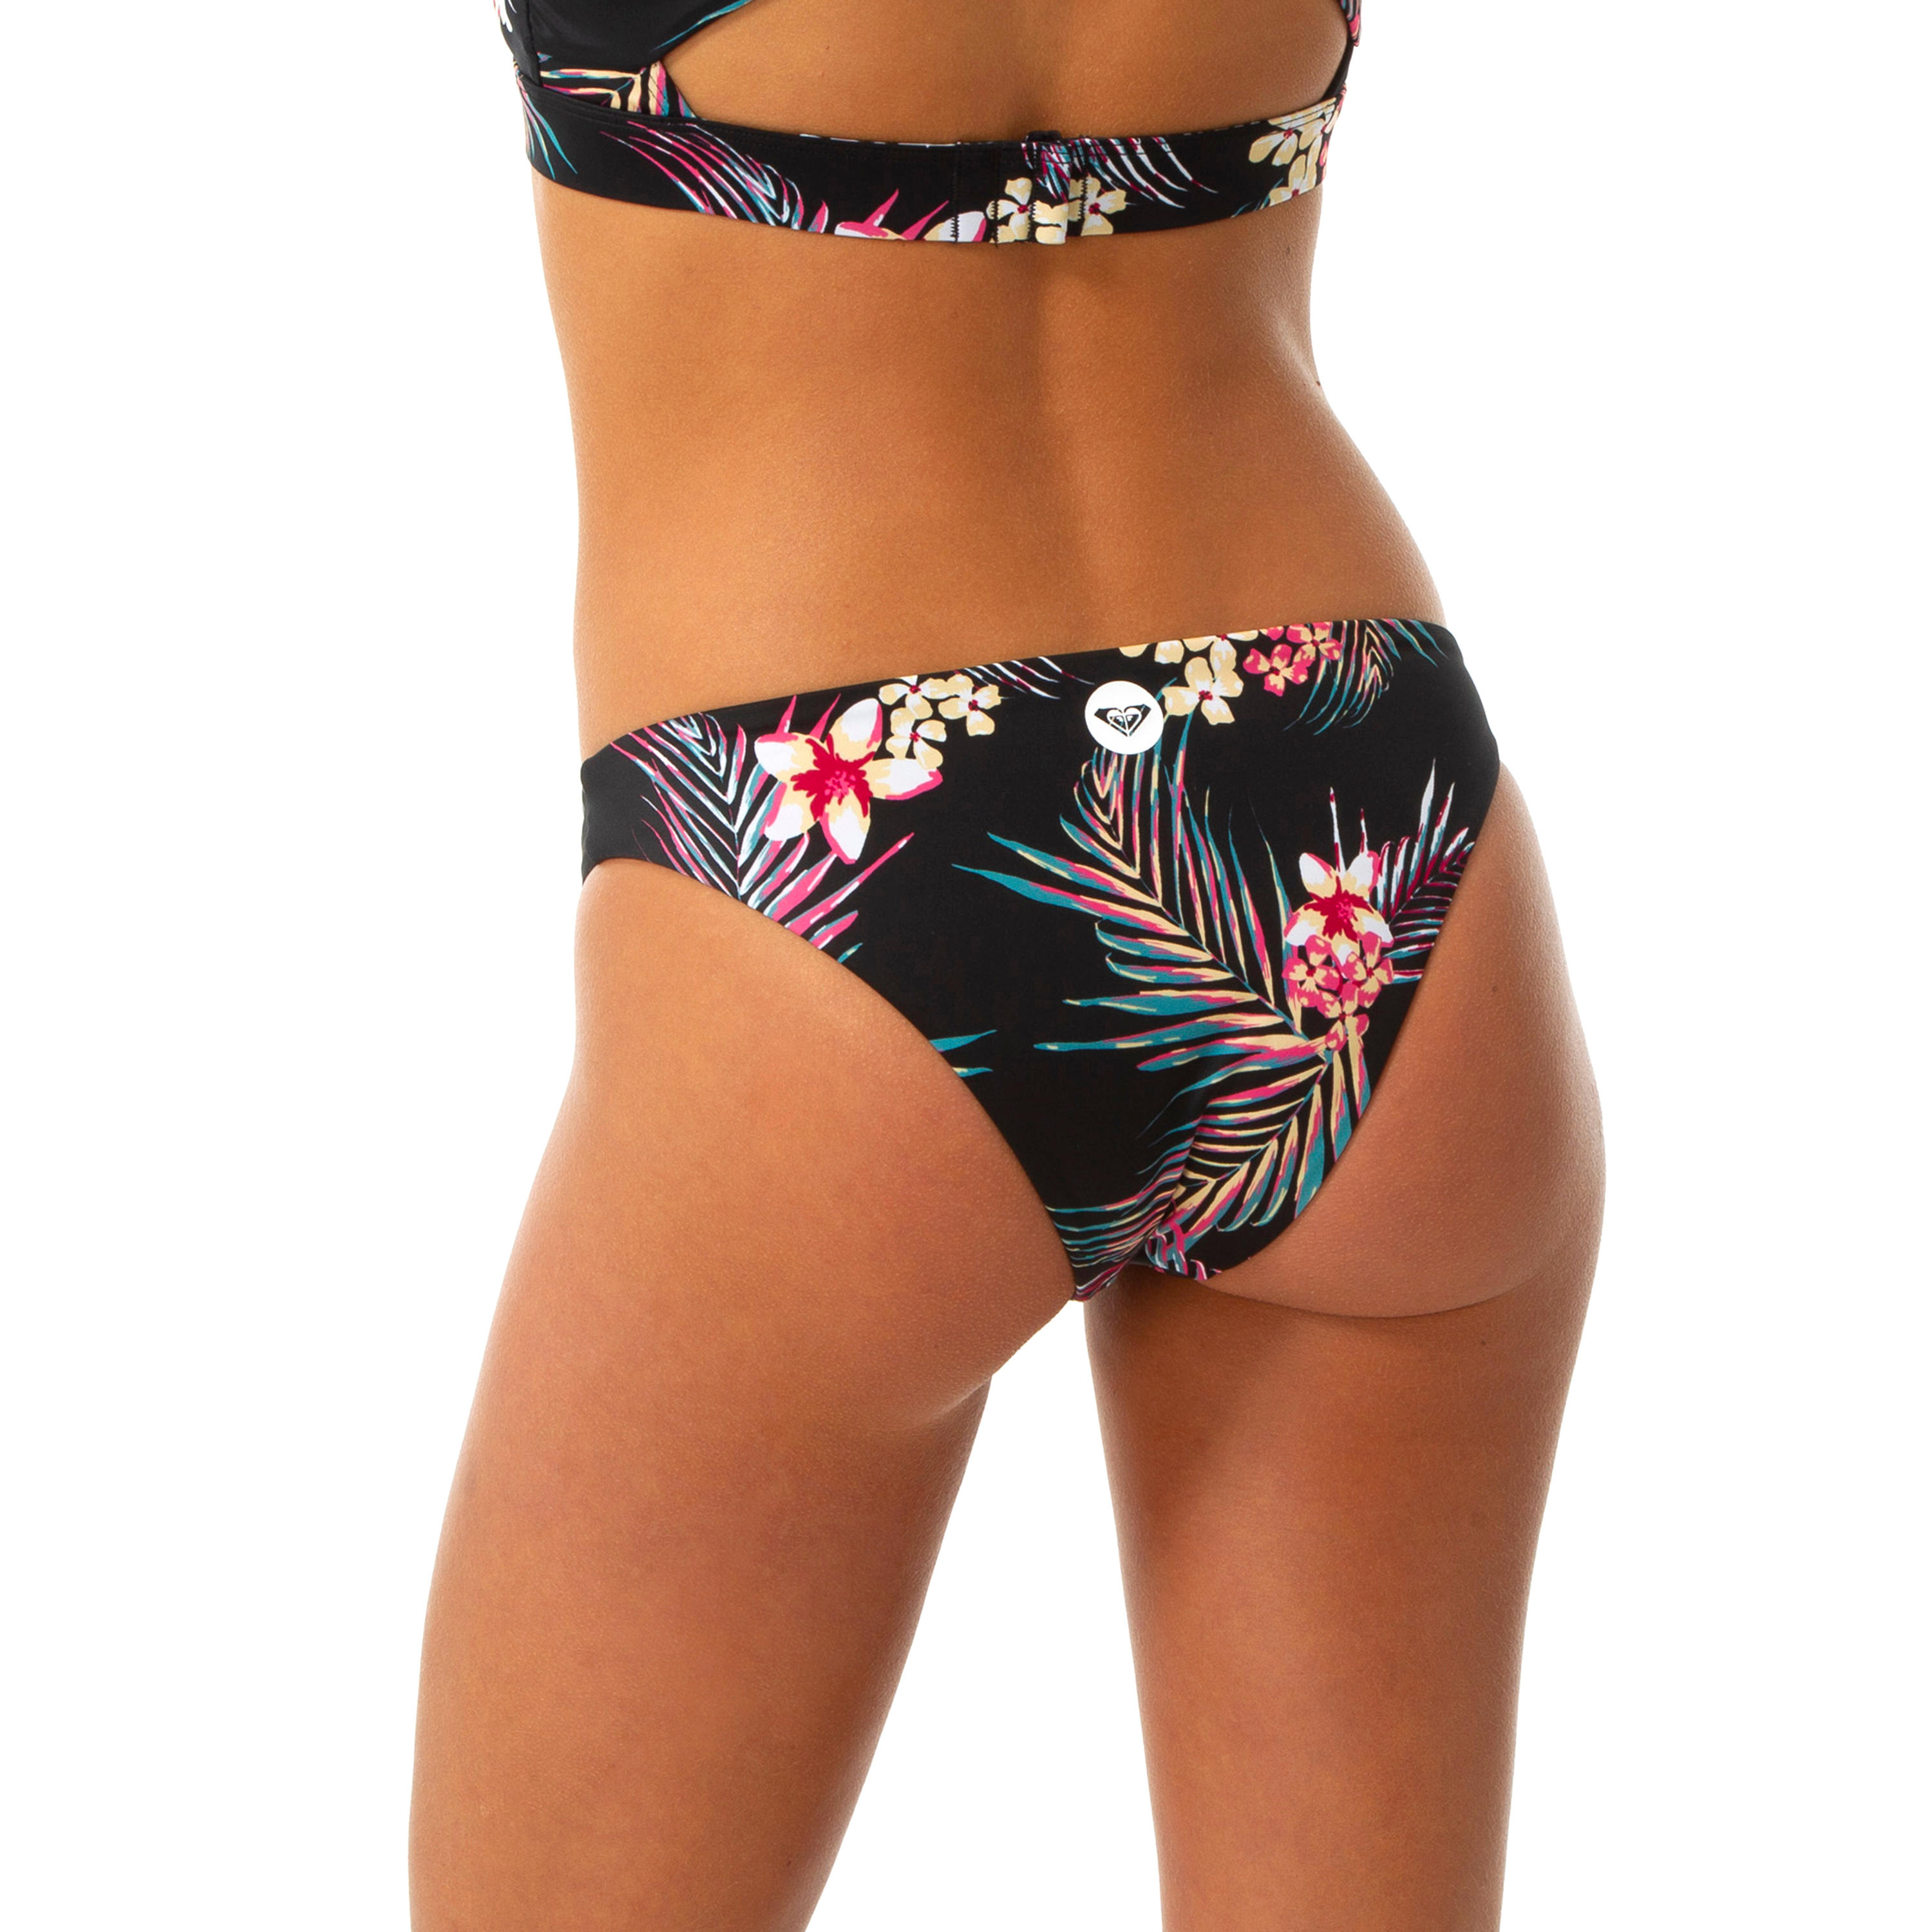 Roxy Women’s swimsuit briefs - Floral 3/8